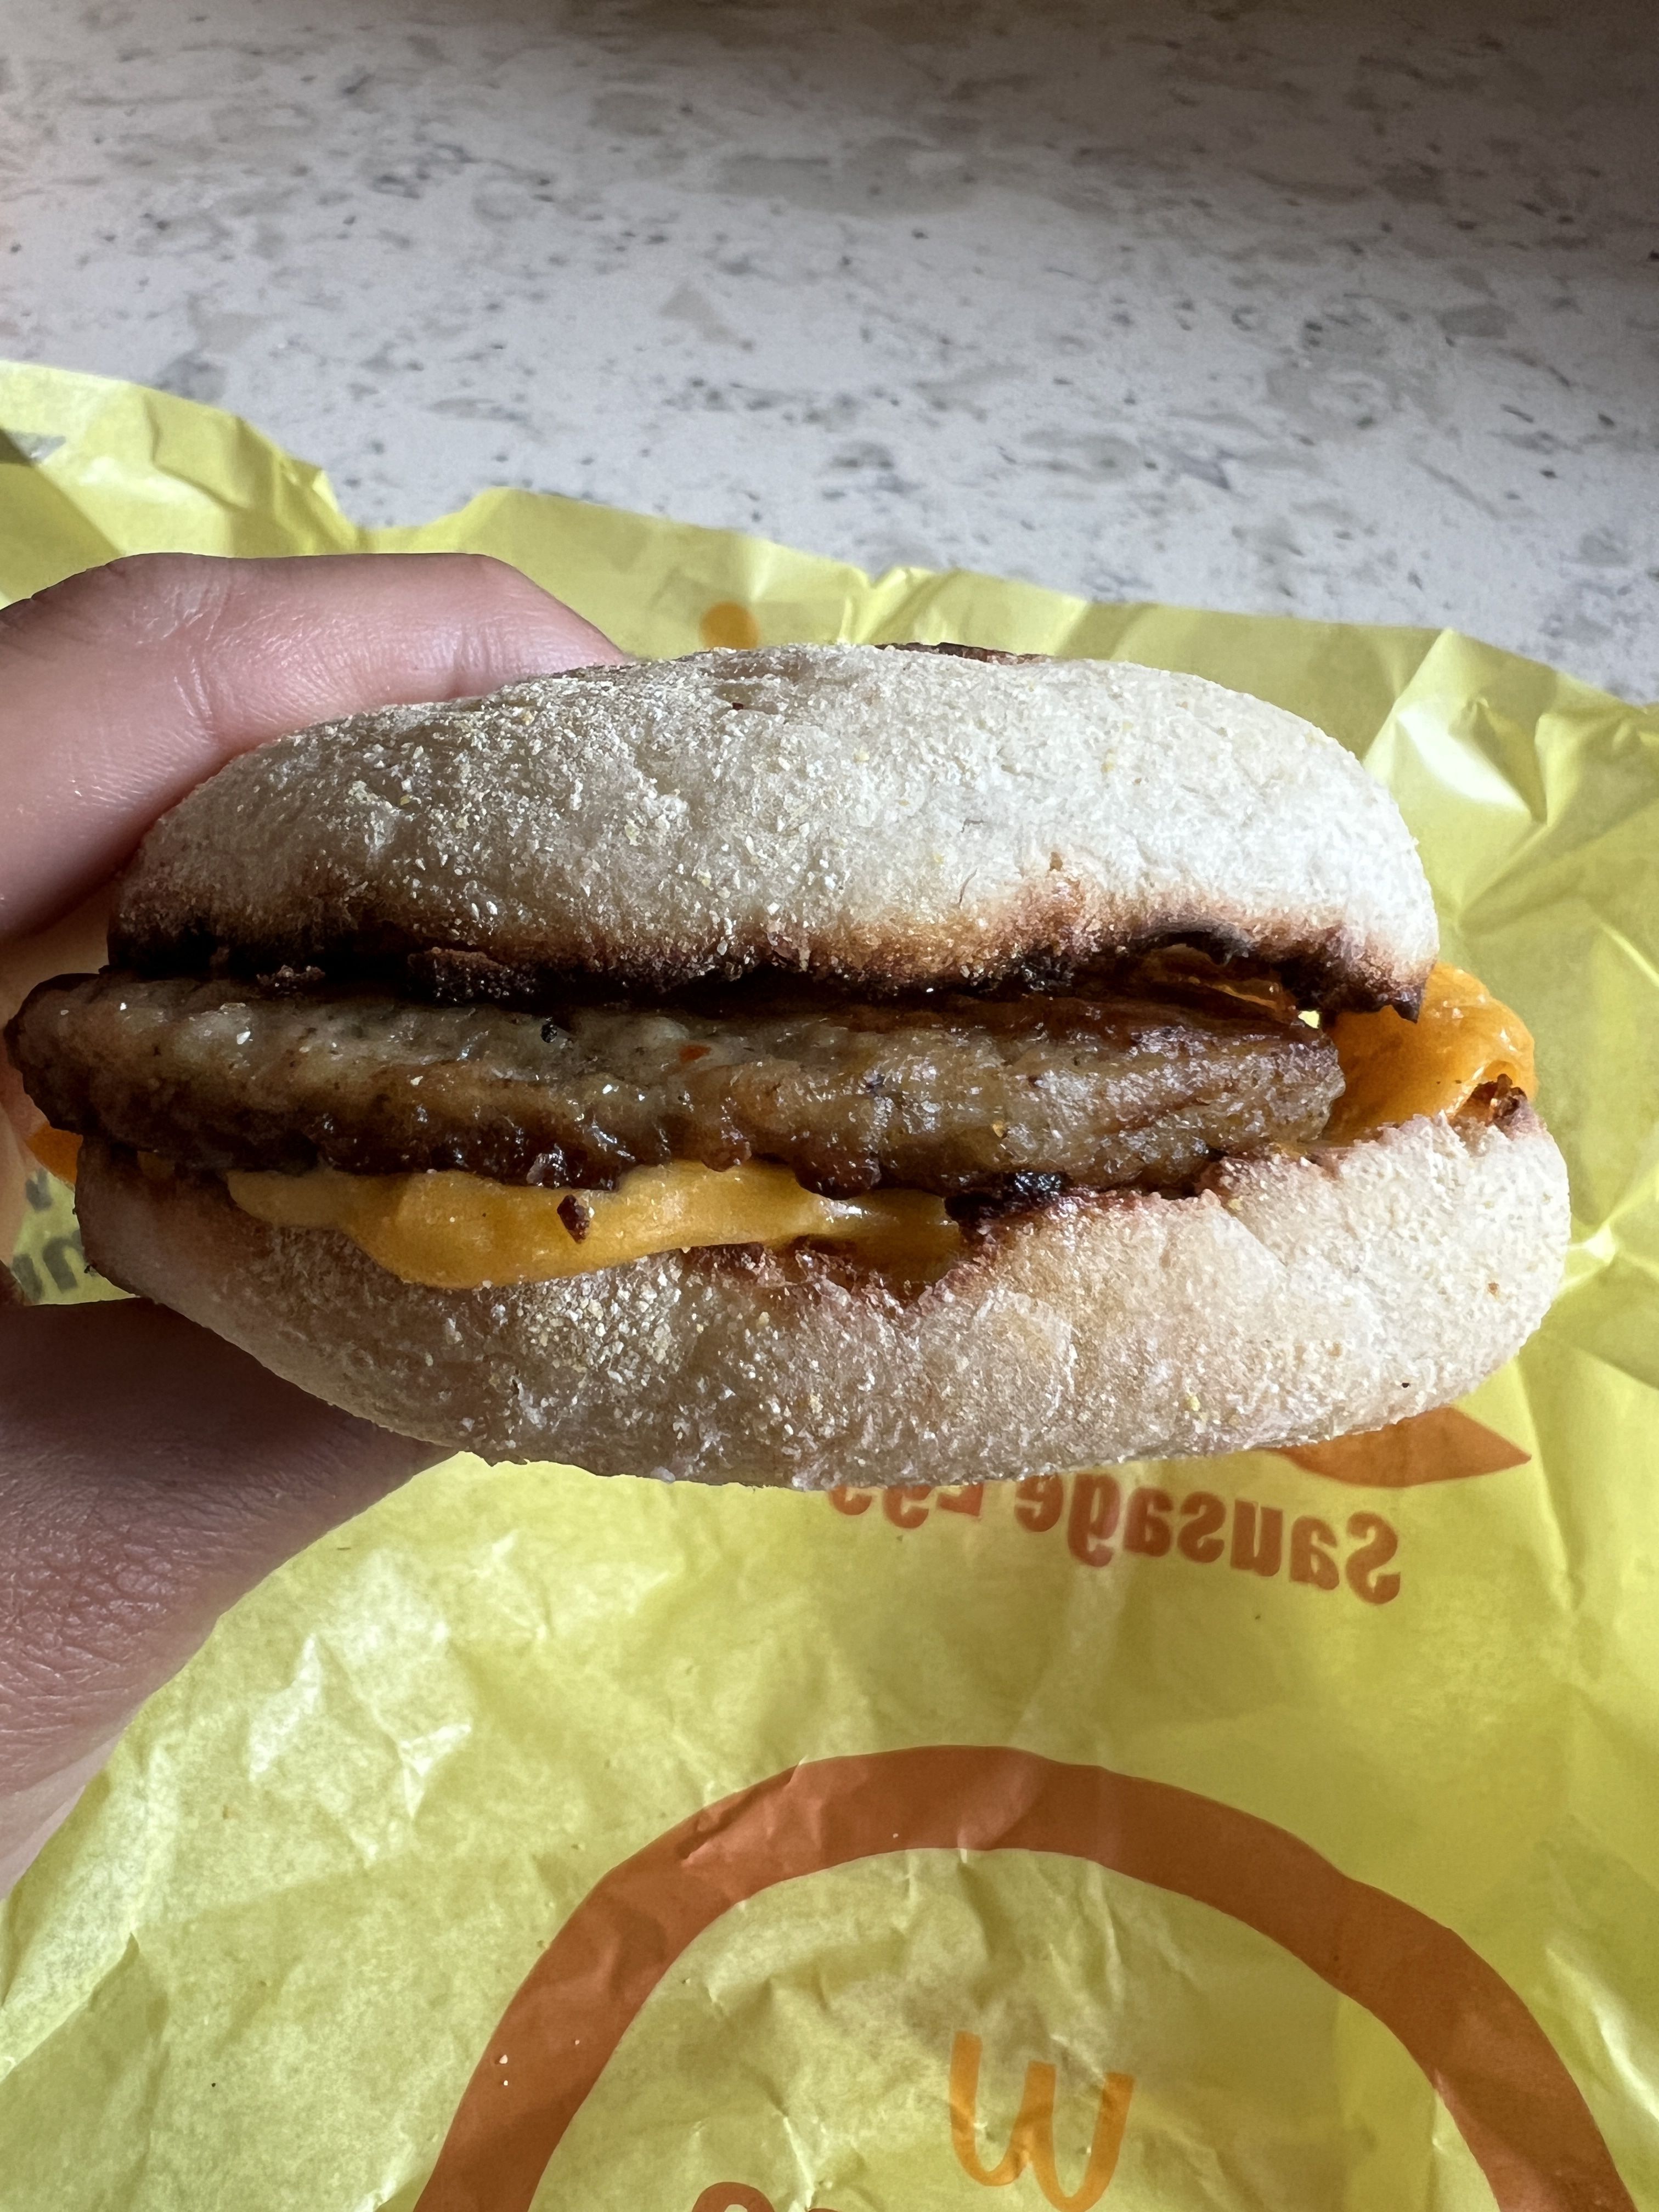 The Vanishing $1 Deals on McDonald's Value Menu